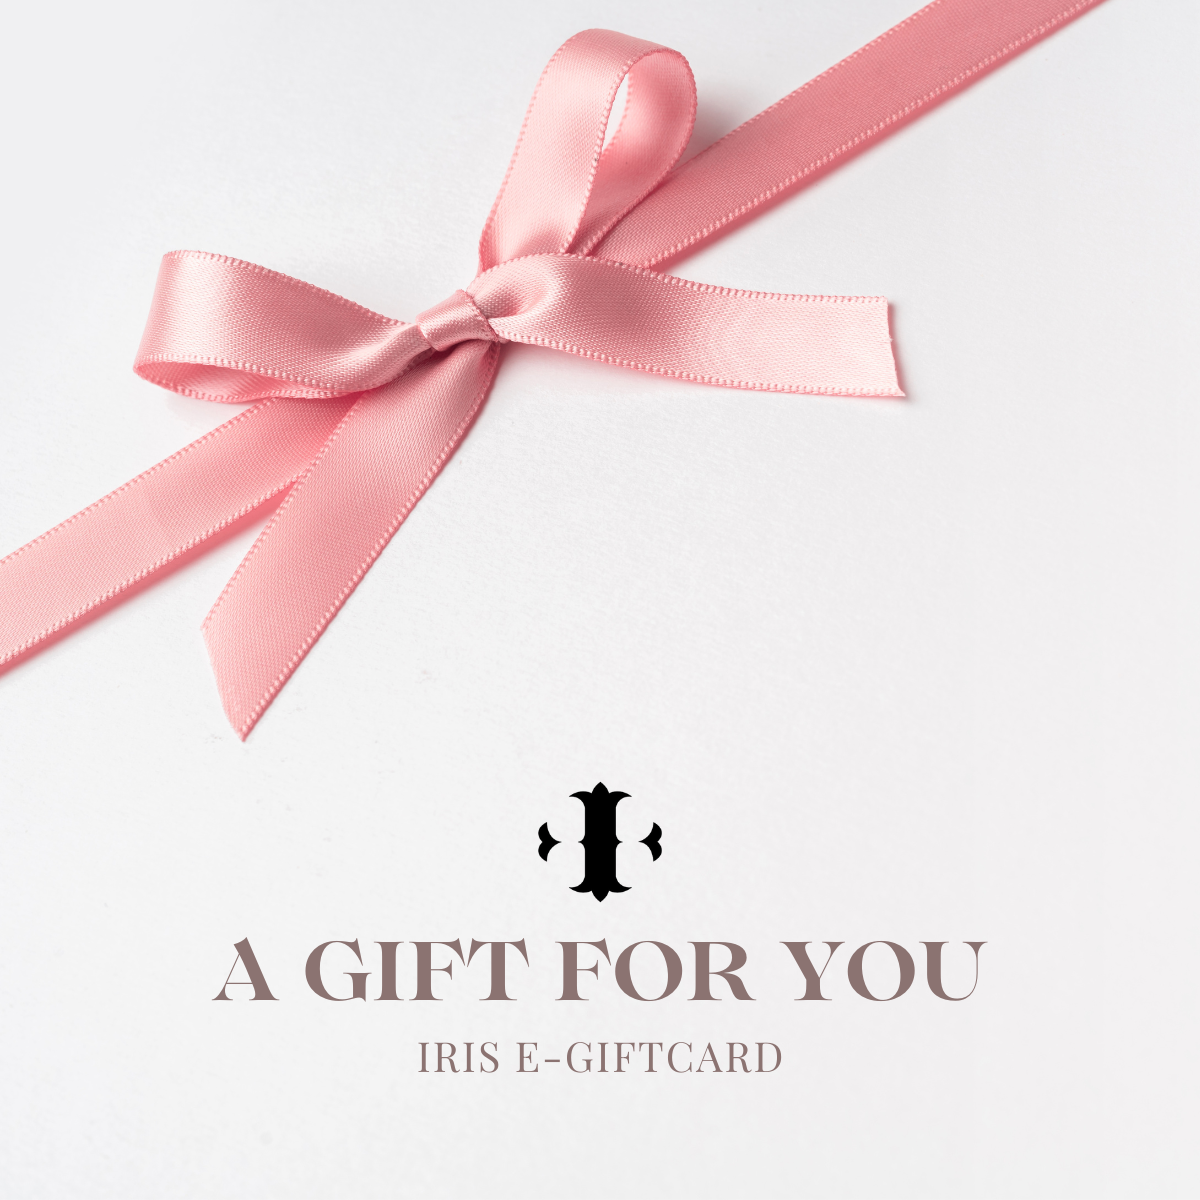 IRIS E-GIFT CARD